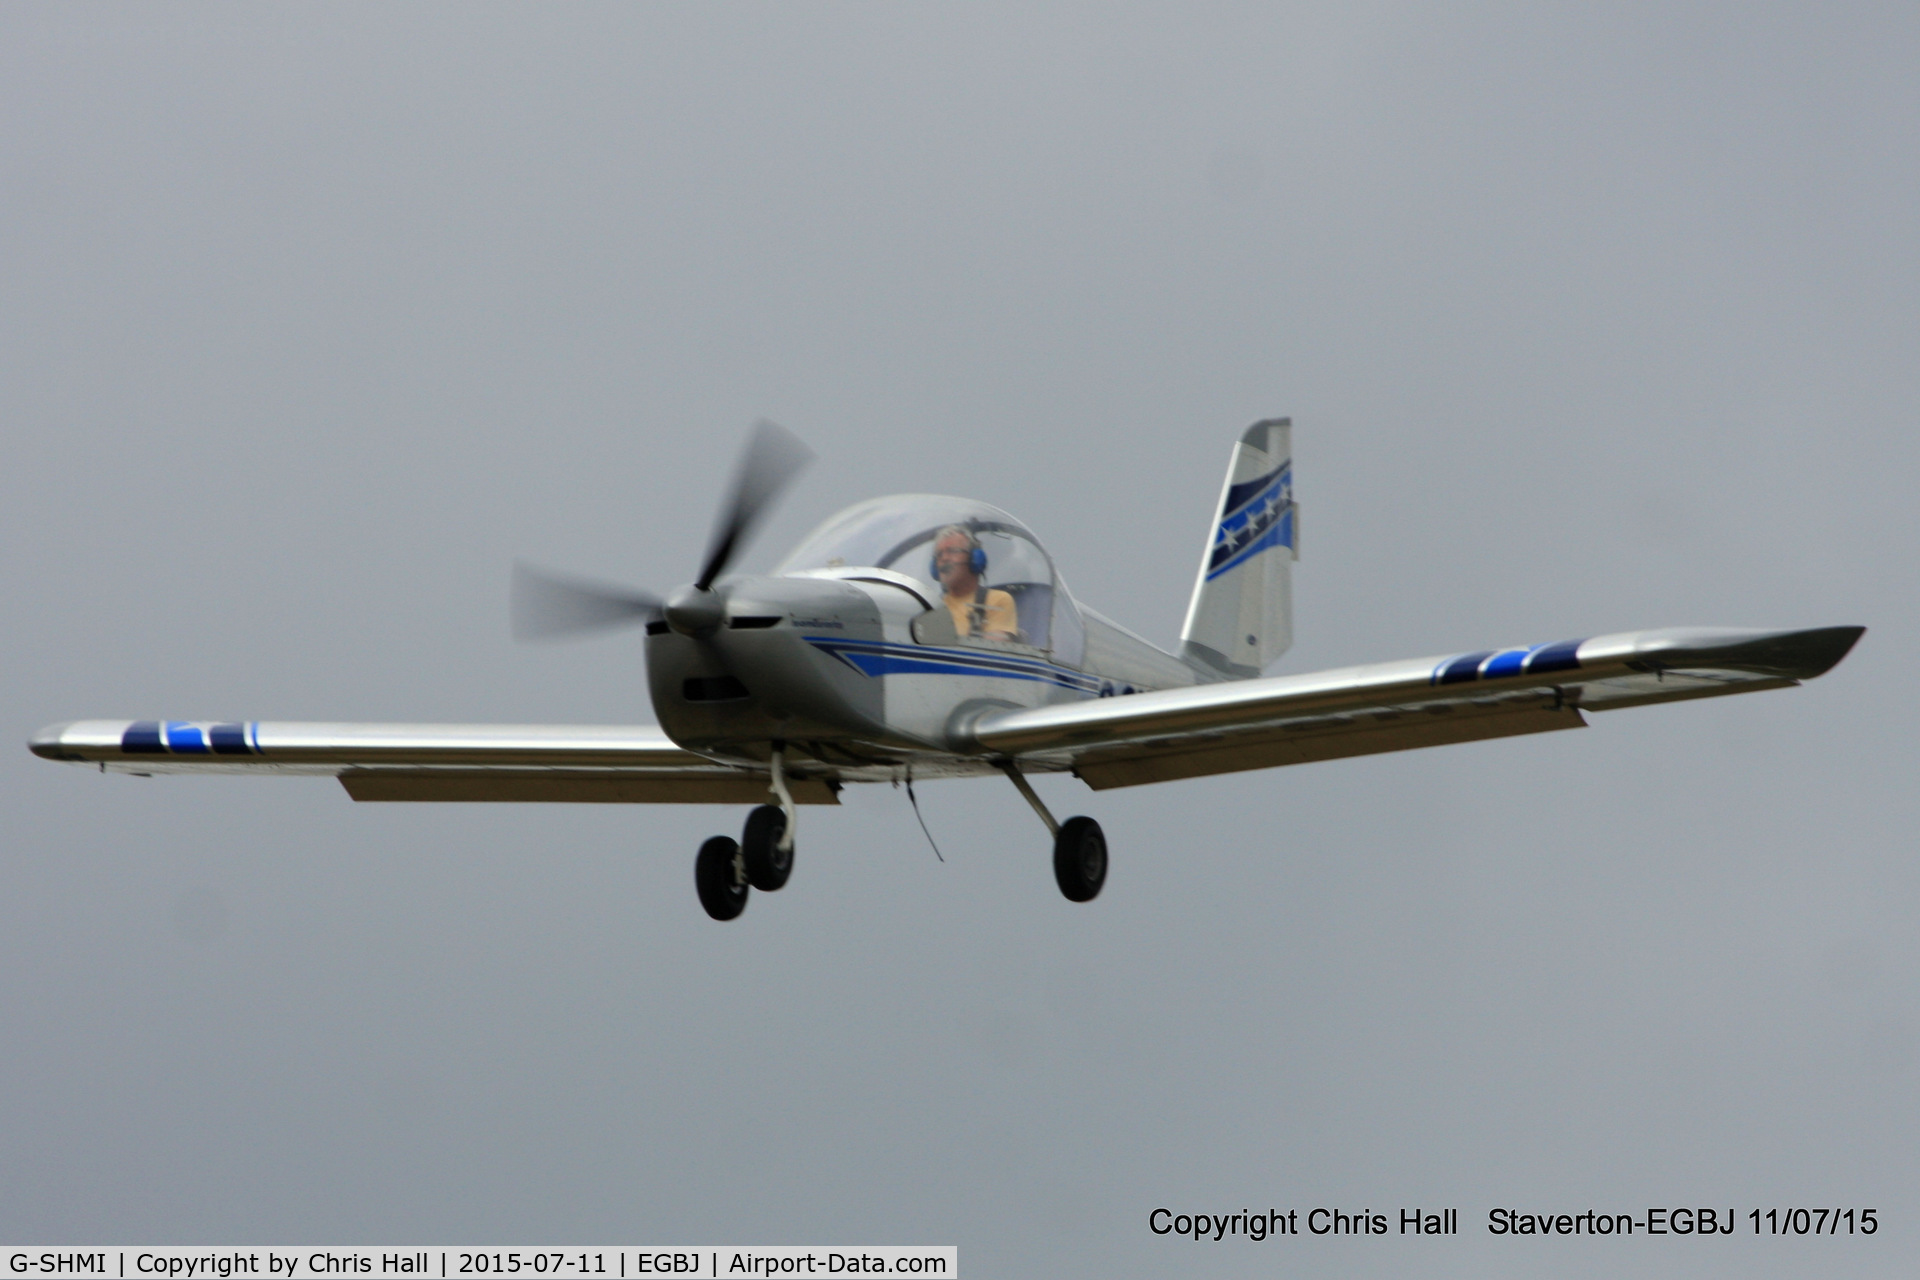 G-SHMI, 2007 Aerotechnik EV-97 TeamEurostar UK C/N 3013, on finals at Staverton